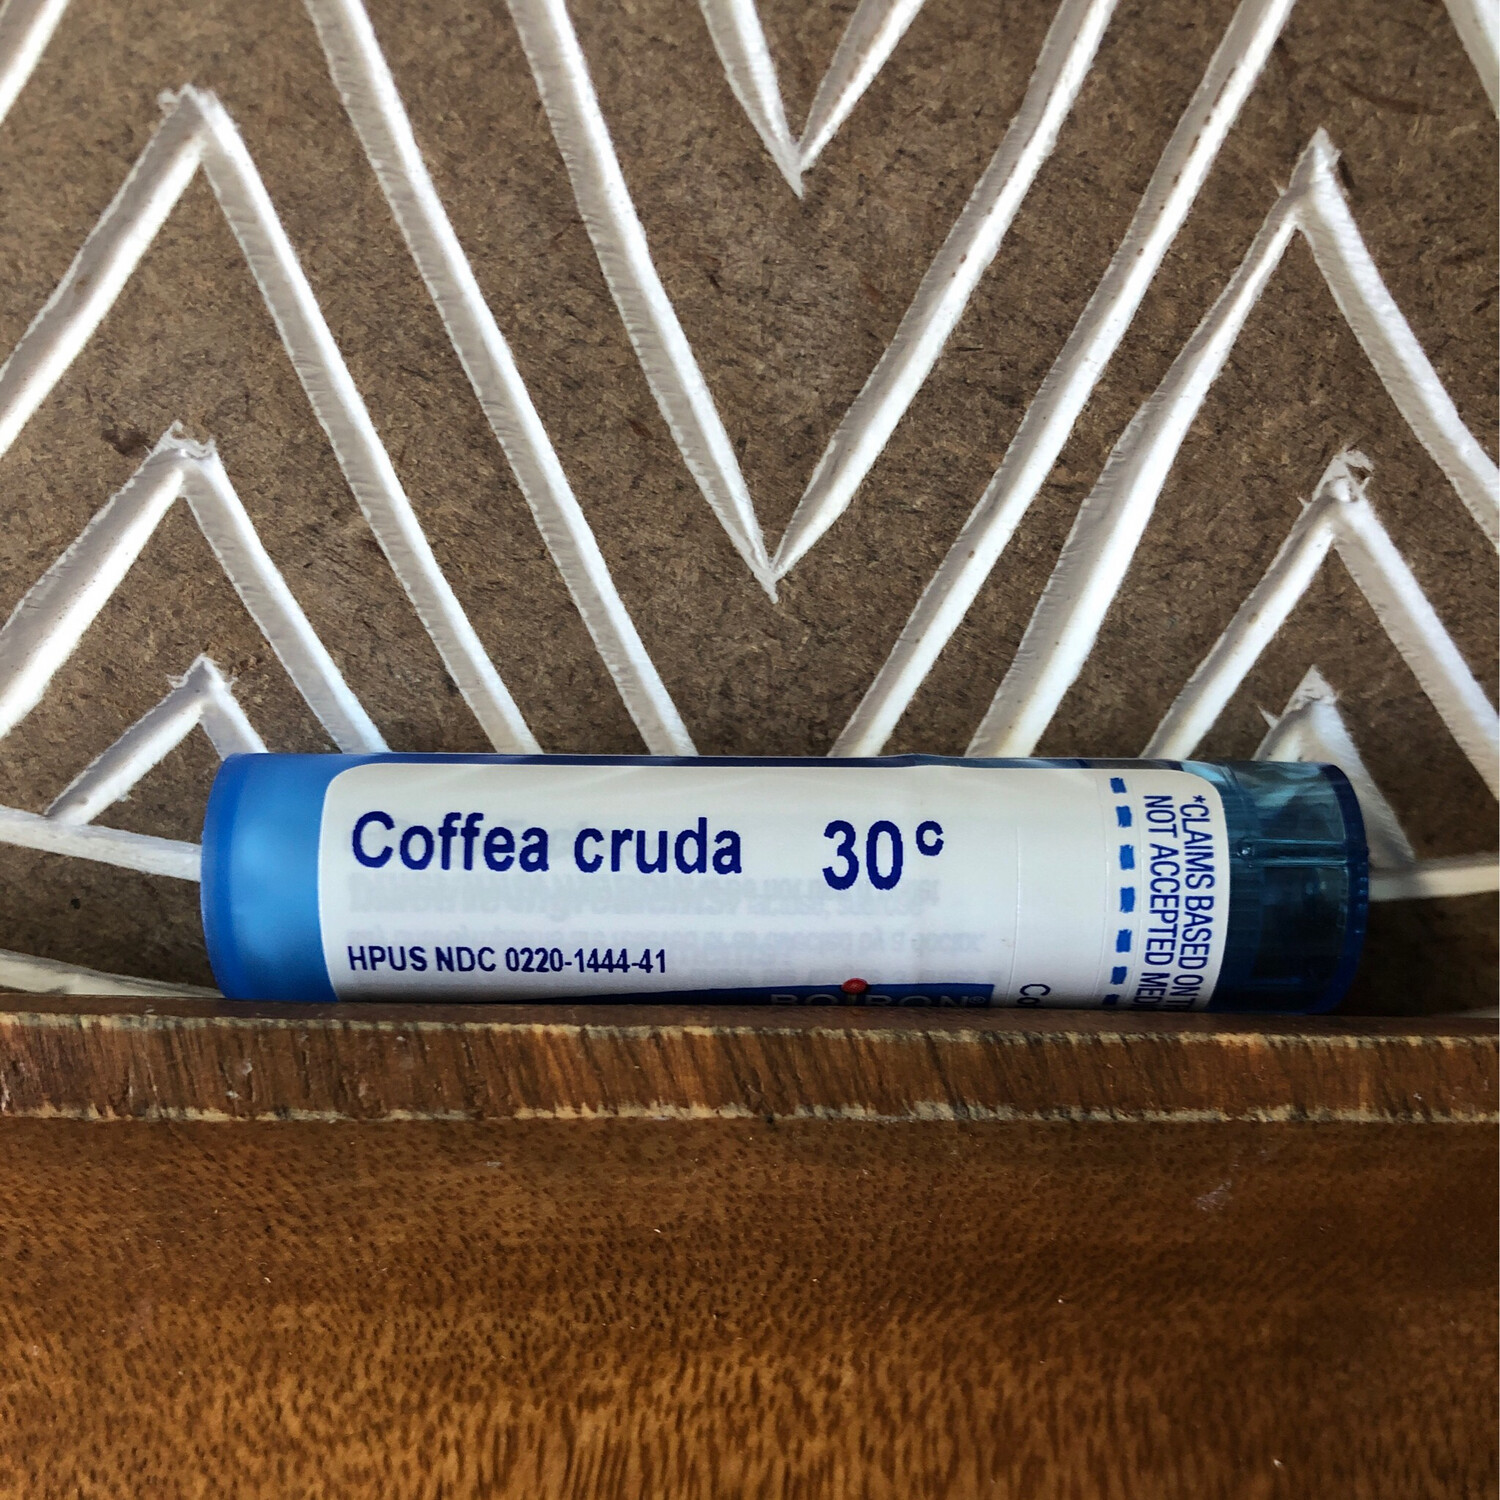 Coffea cruda (Sleeplessness with mental hyperactivity)